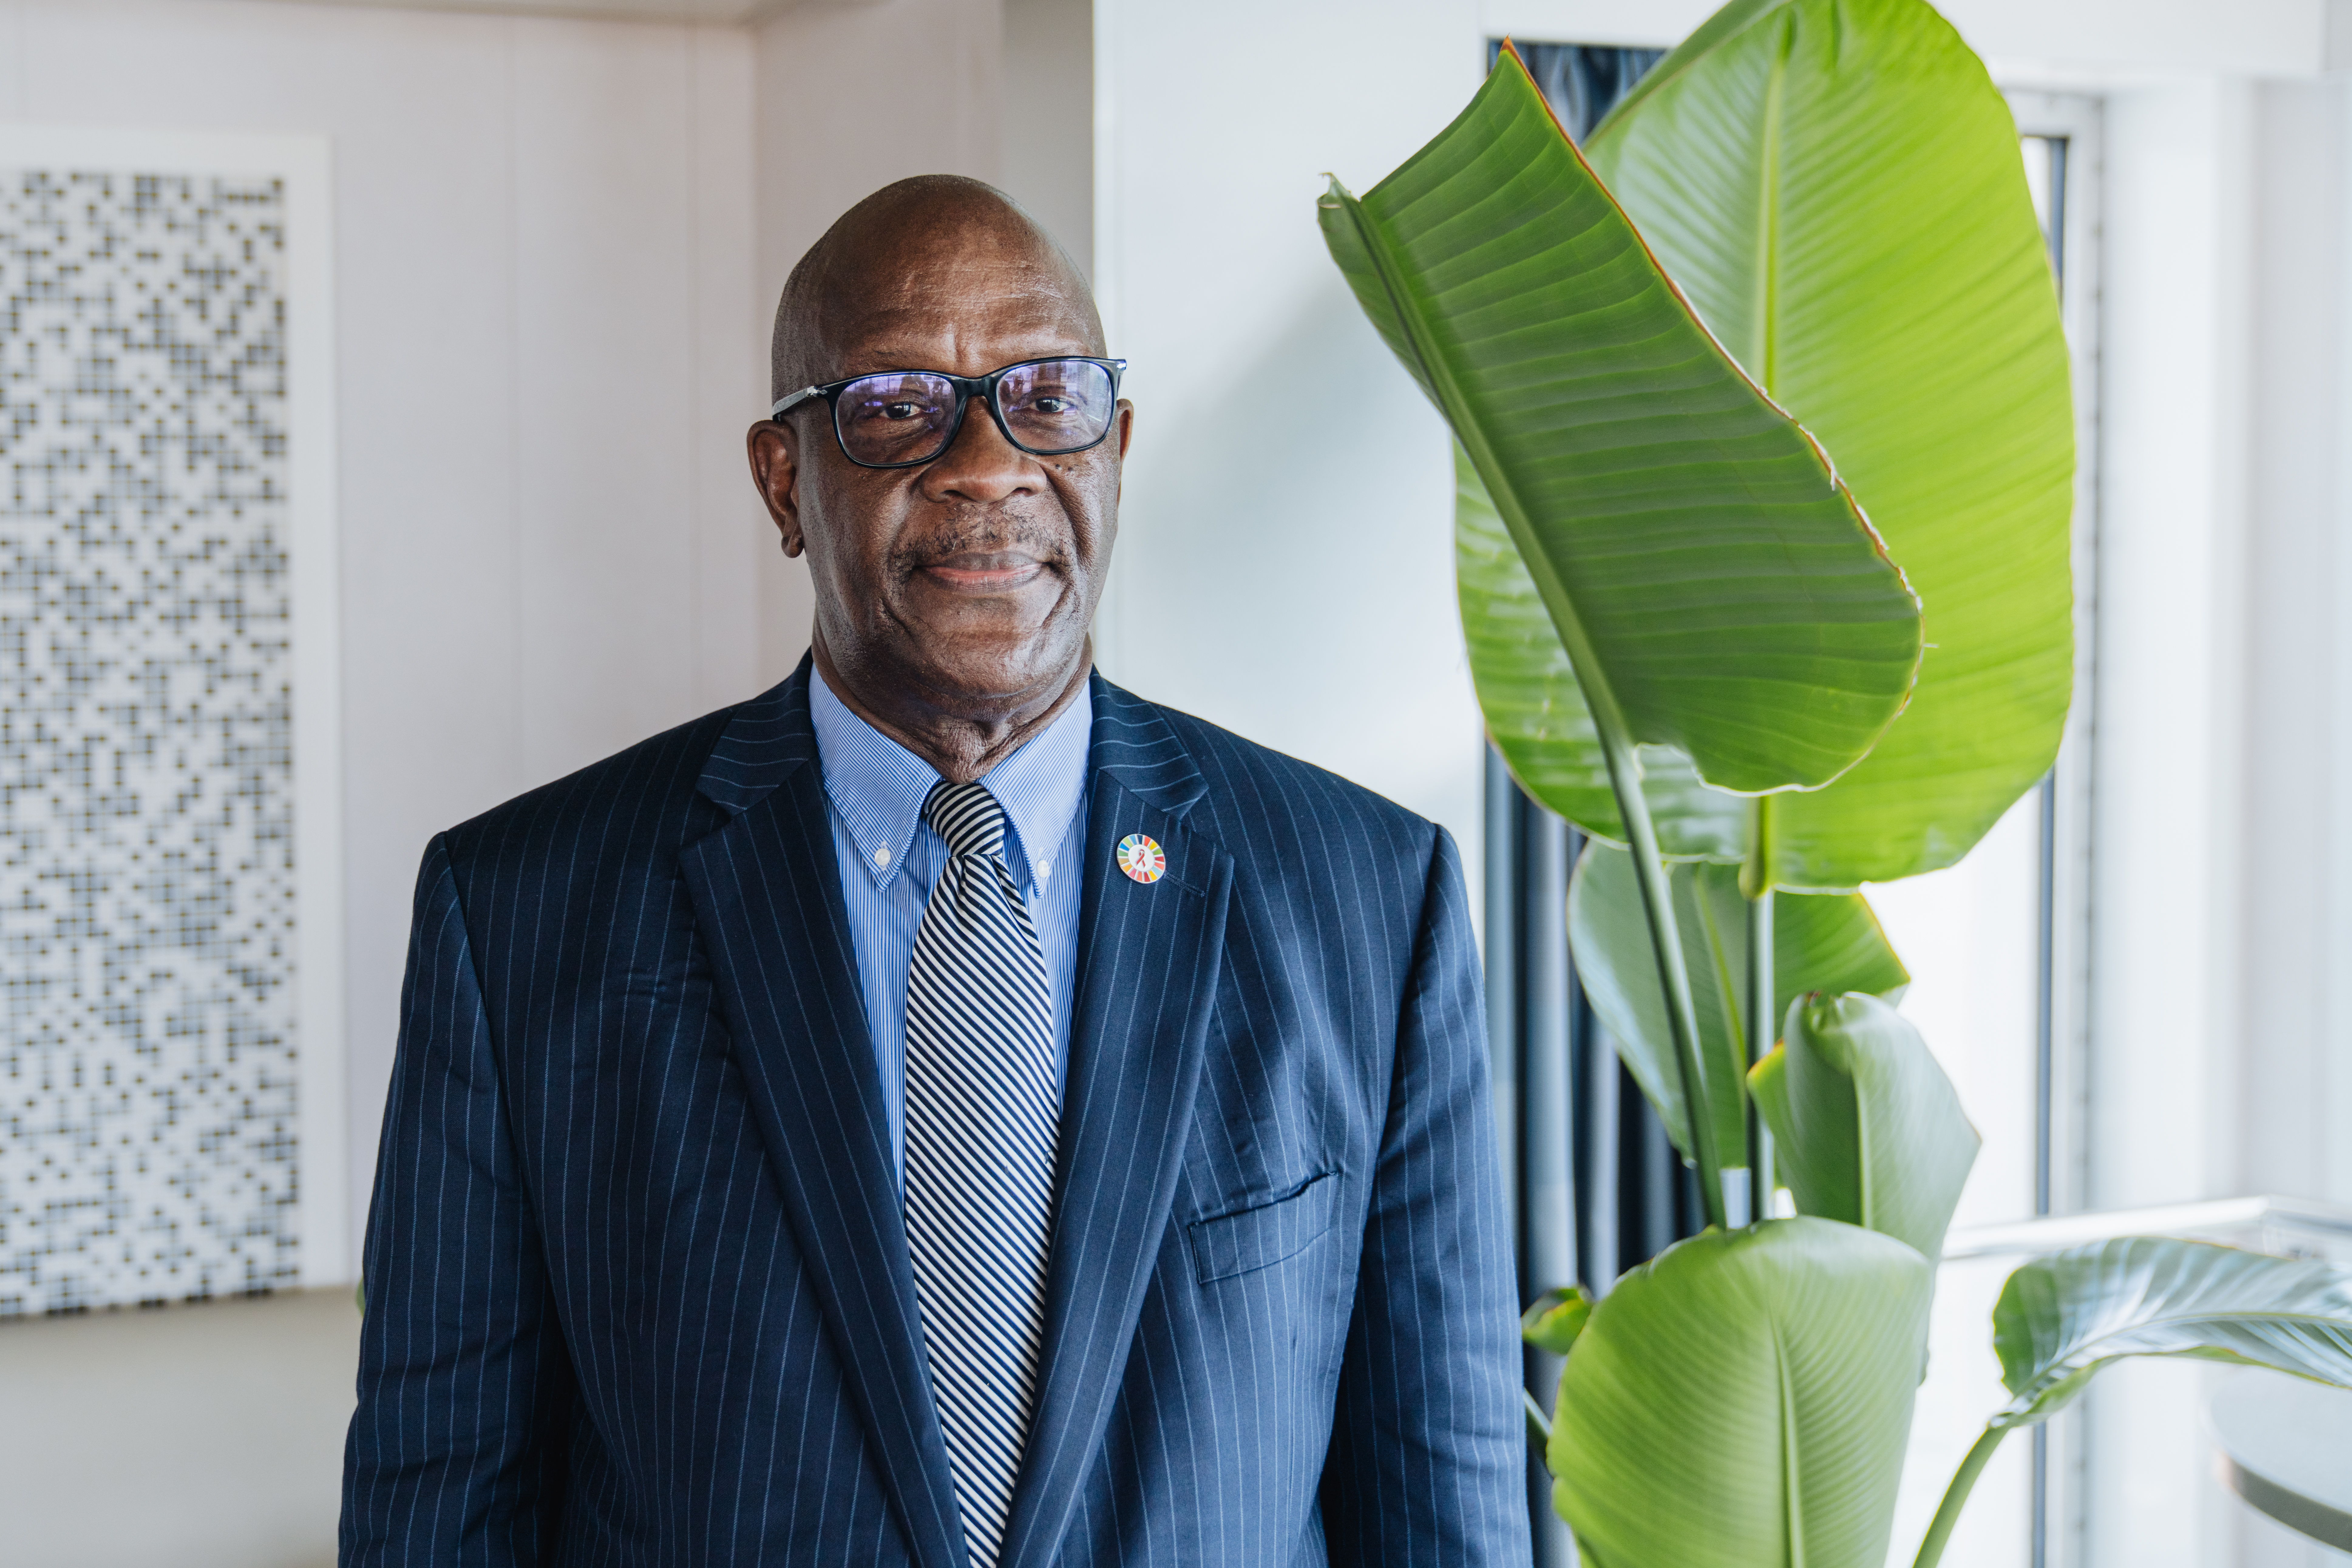 De minister van Volksgezondheid van Sierra Leone, Dr. Austin Demby